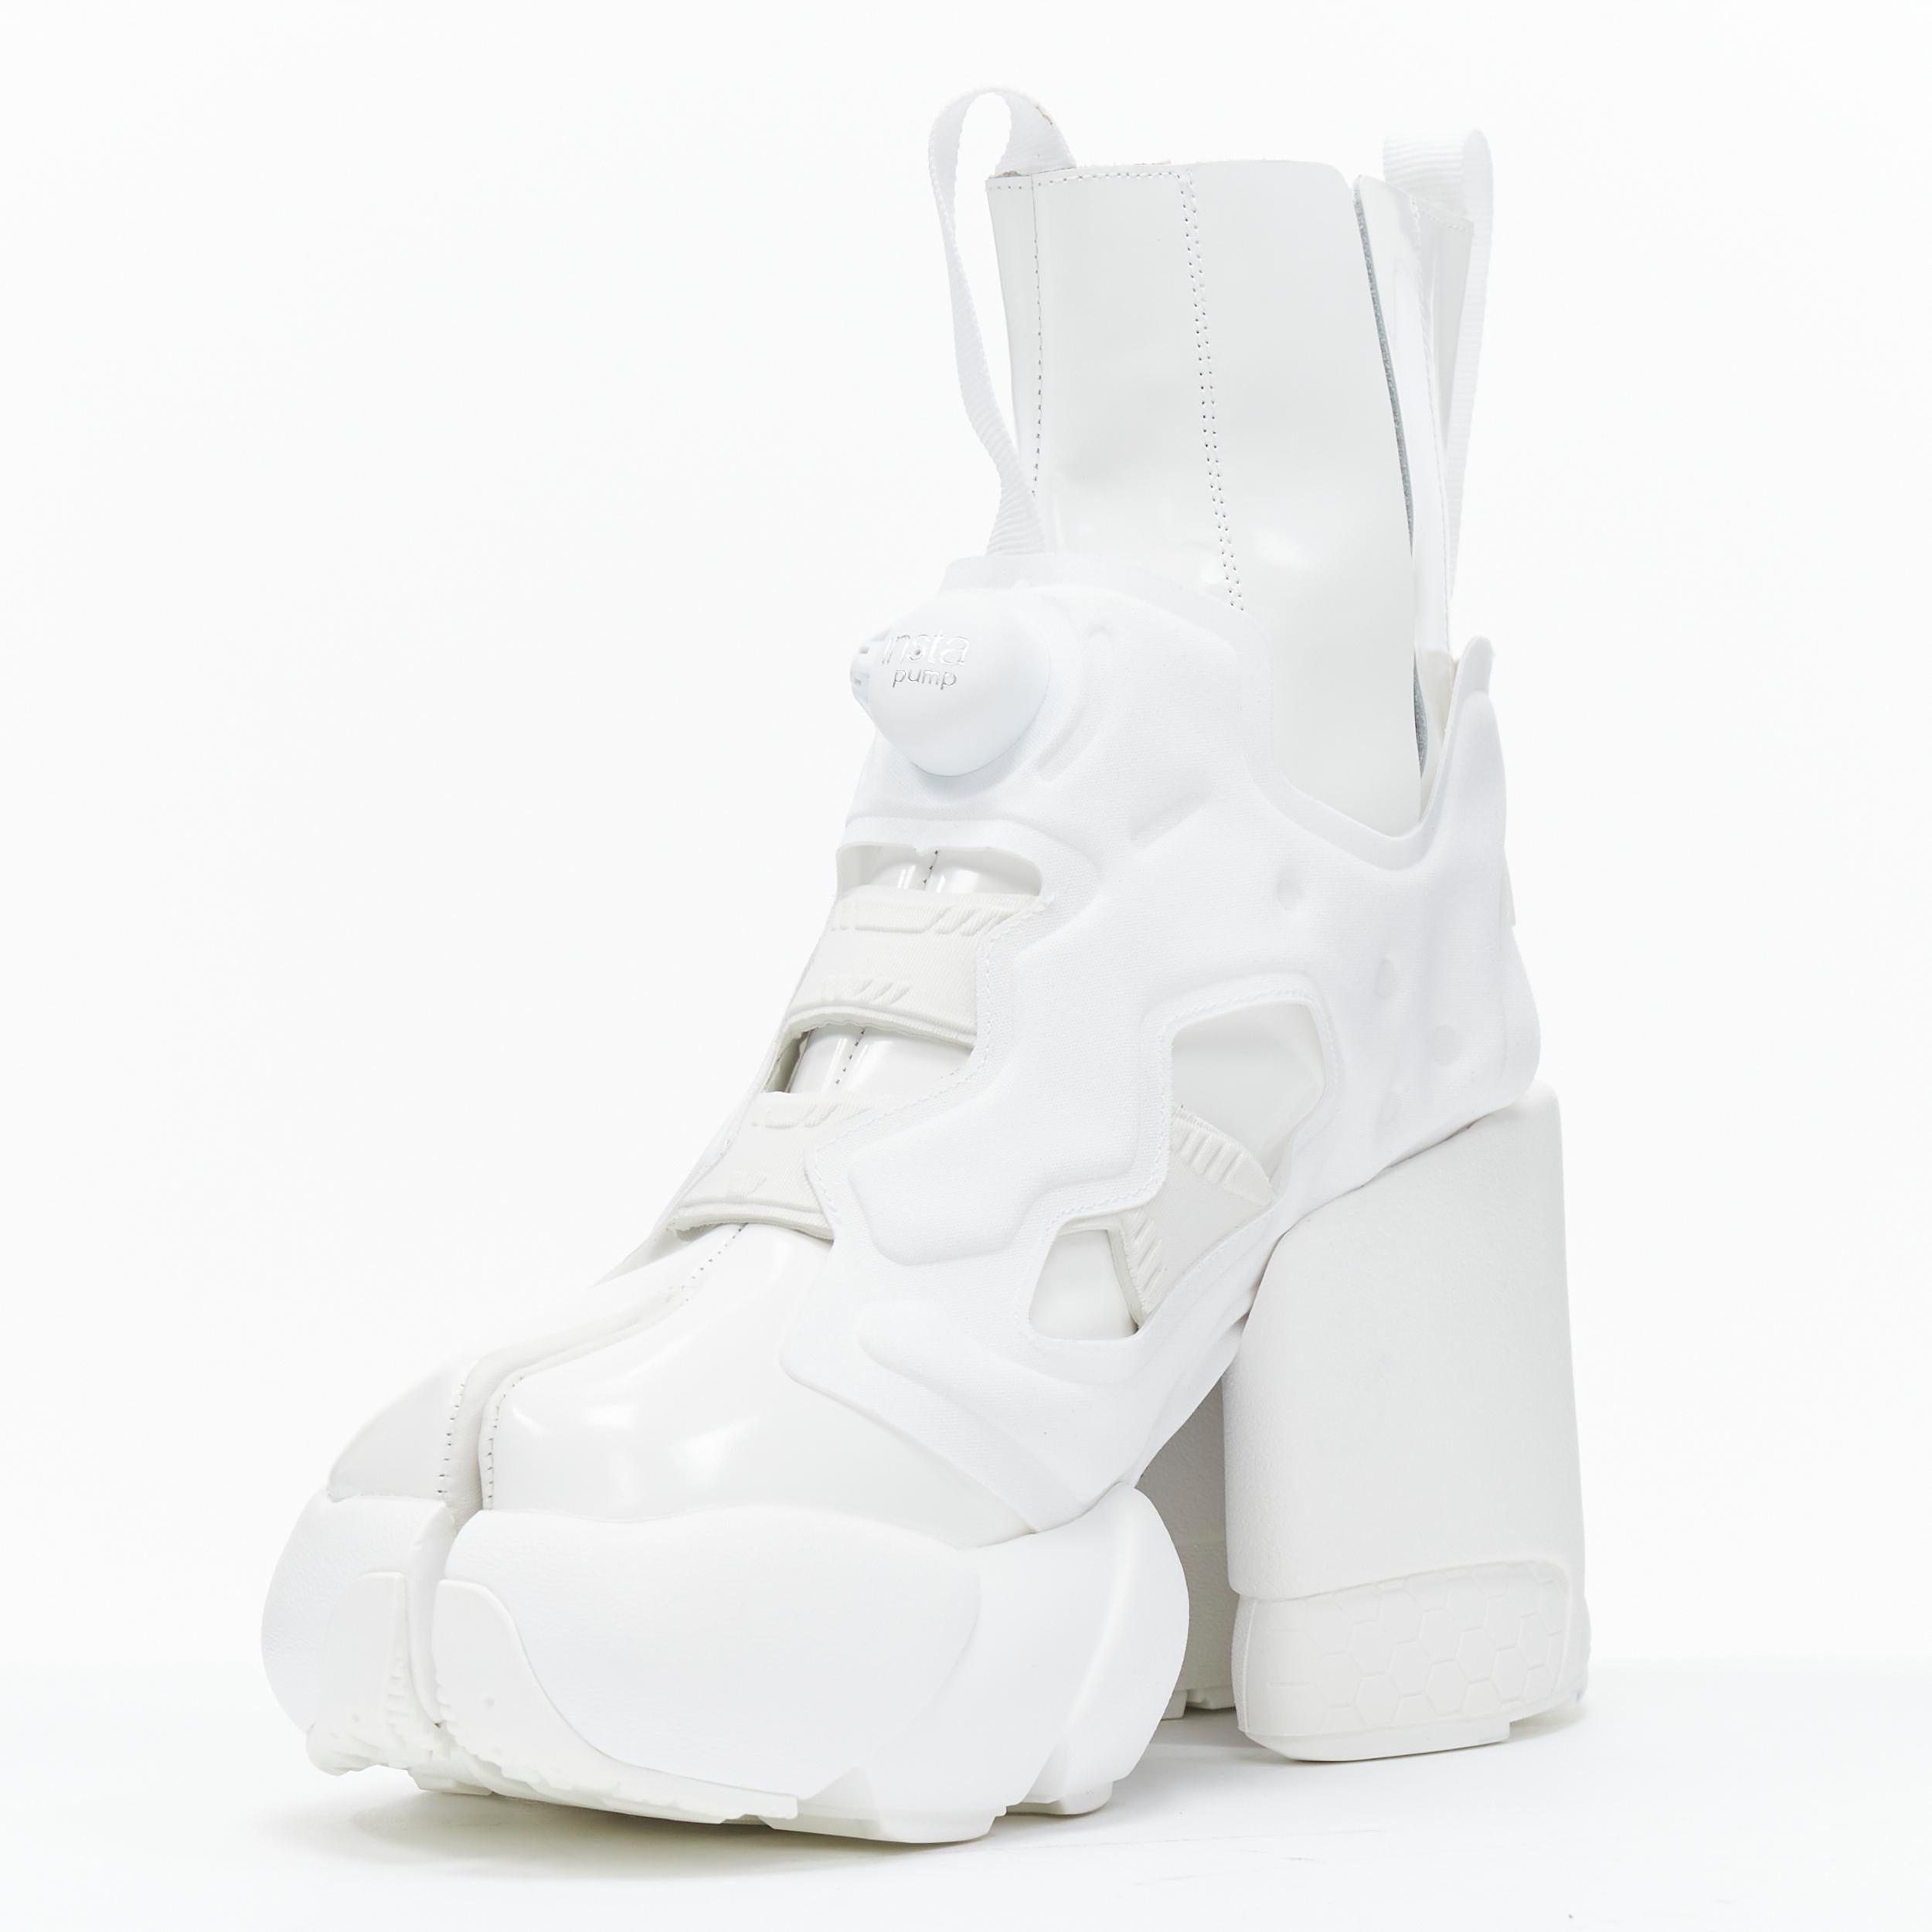 Gray new MAISON MARGIELA REEBOK 2020 Runway Tabi Instapump white sneaker boot EU38